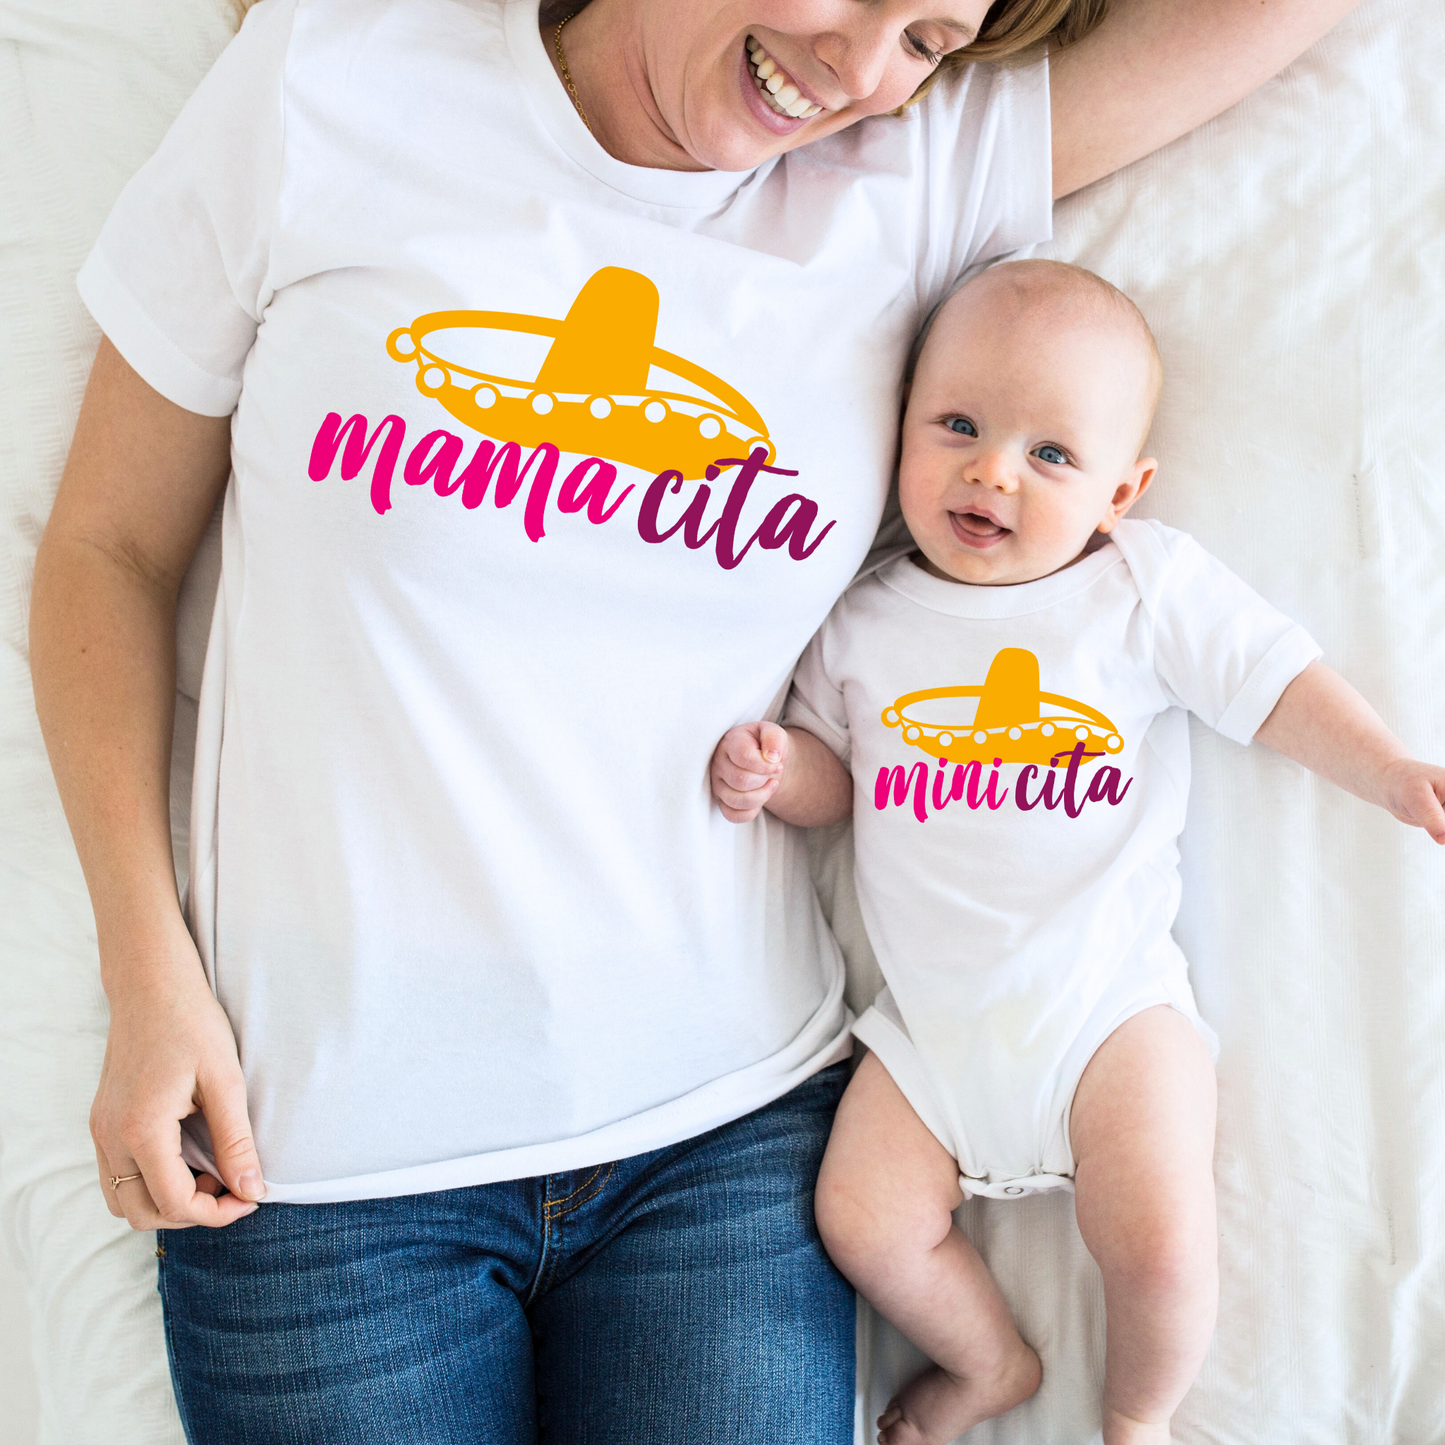 Mama Cita and Mini Cita - Matching Outfit Set